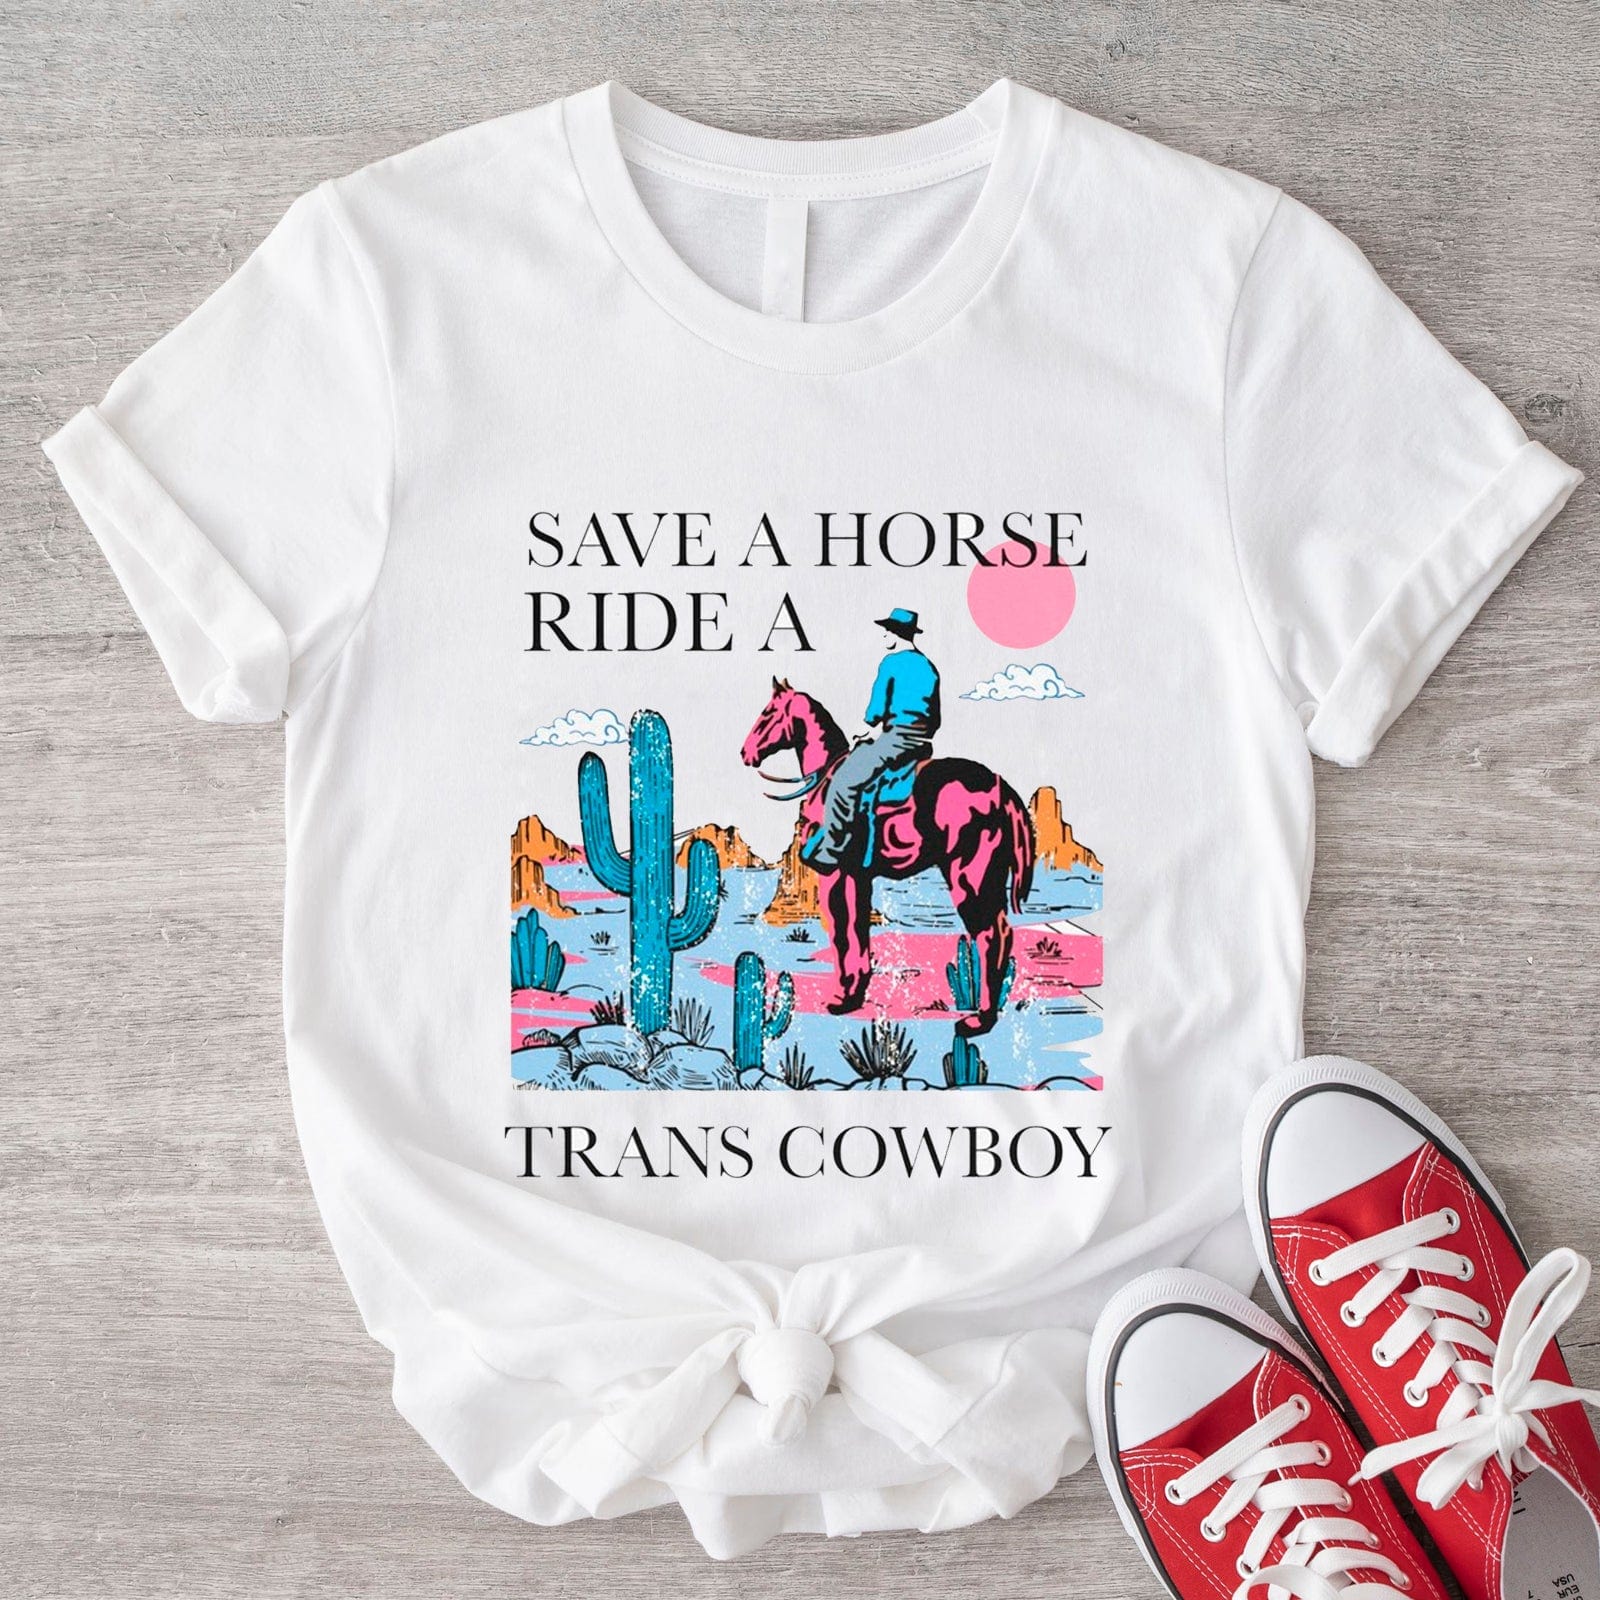 Save A Horse Ride A Trans Cowboy LGBT Transgender Shirt